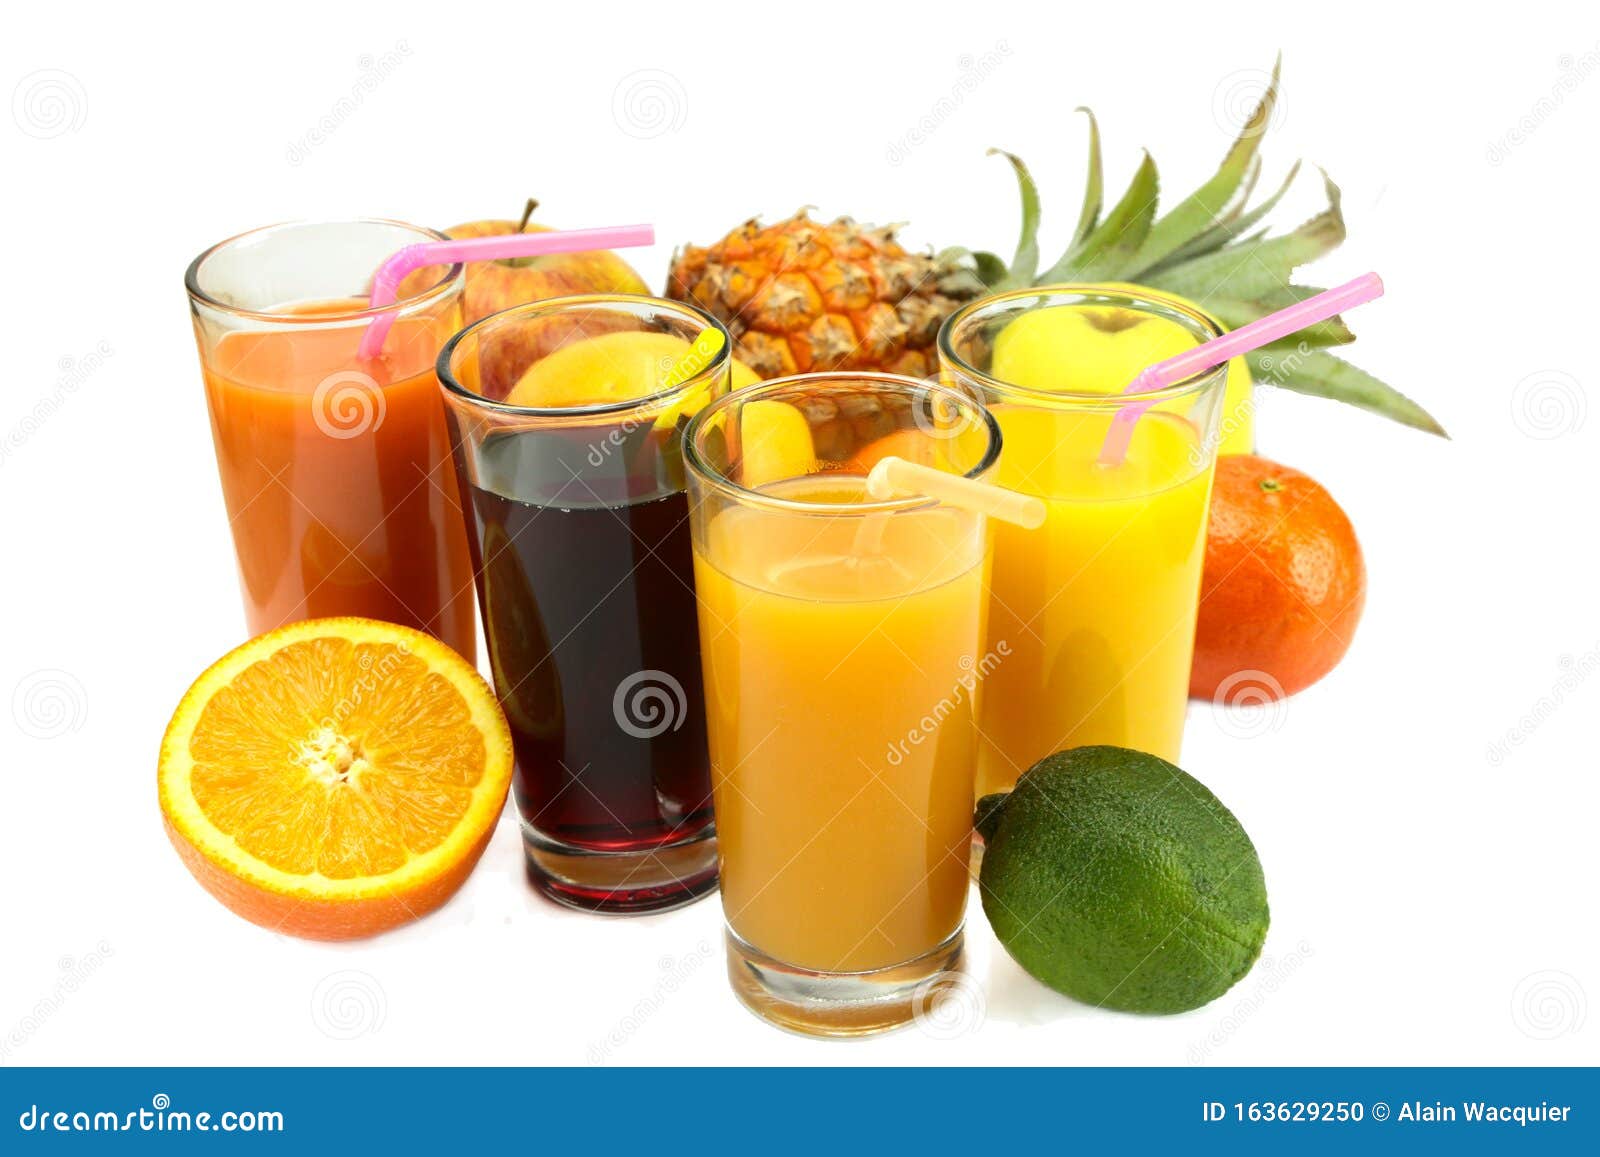 https://thumbs.dreamstime.com/z/glass-fruit-juice-white-background-glass-fruit-juice-orange-grape-tropical-guava-163629250.jpg